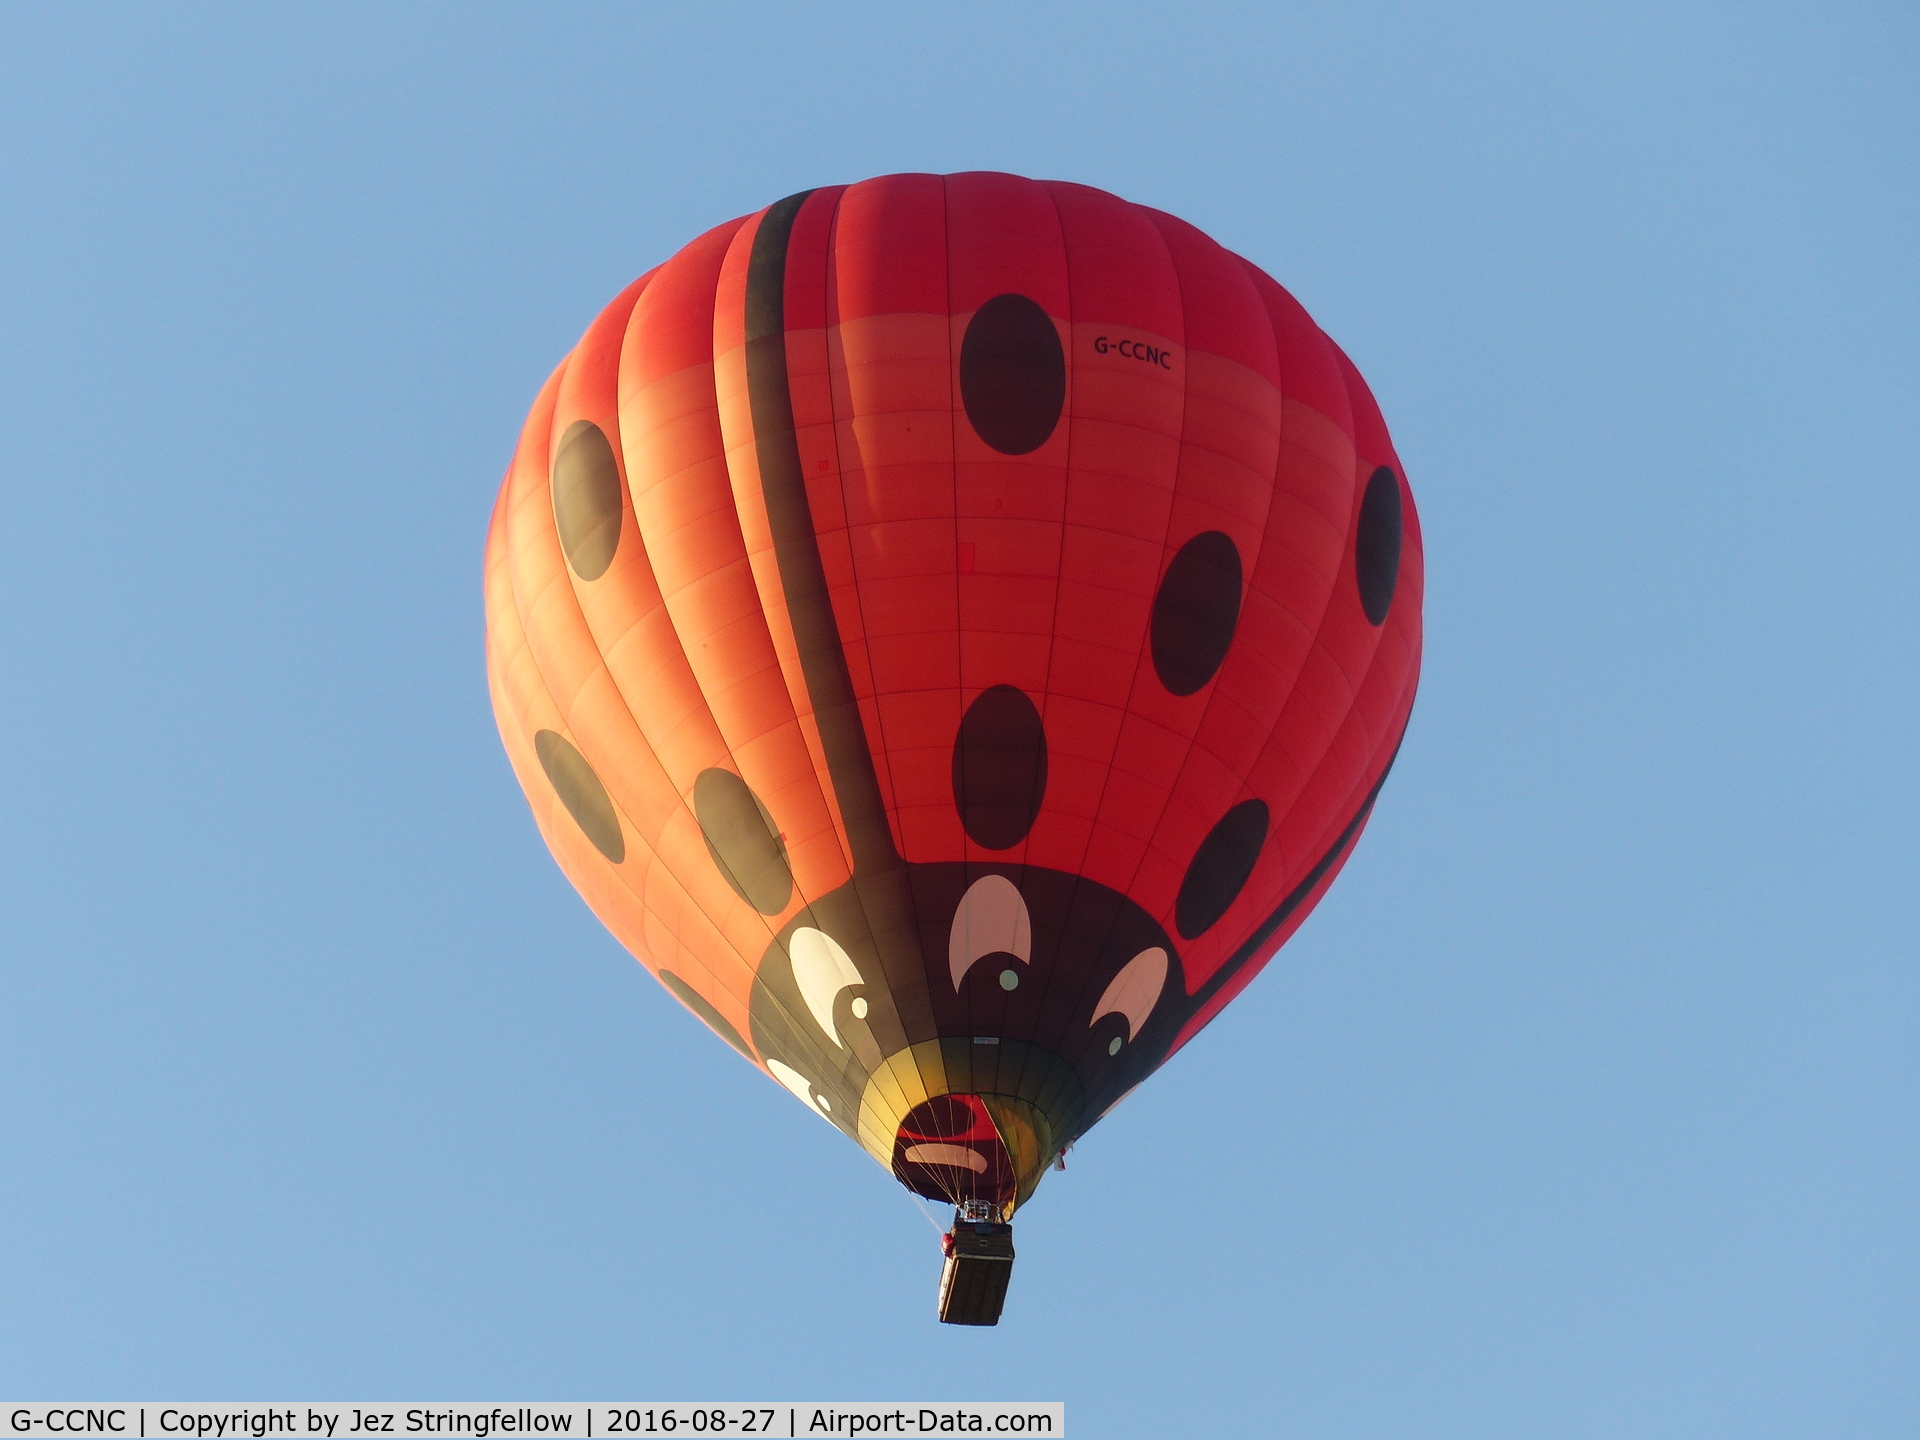 G-CCNC, 2003 Cameron Balloons Z-275 C/N 10504, Ladybird Balloon over Pilsley Derbyshire taken from my garden